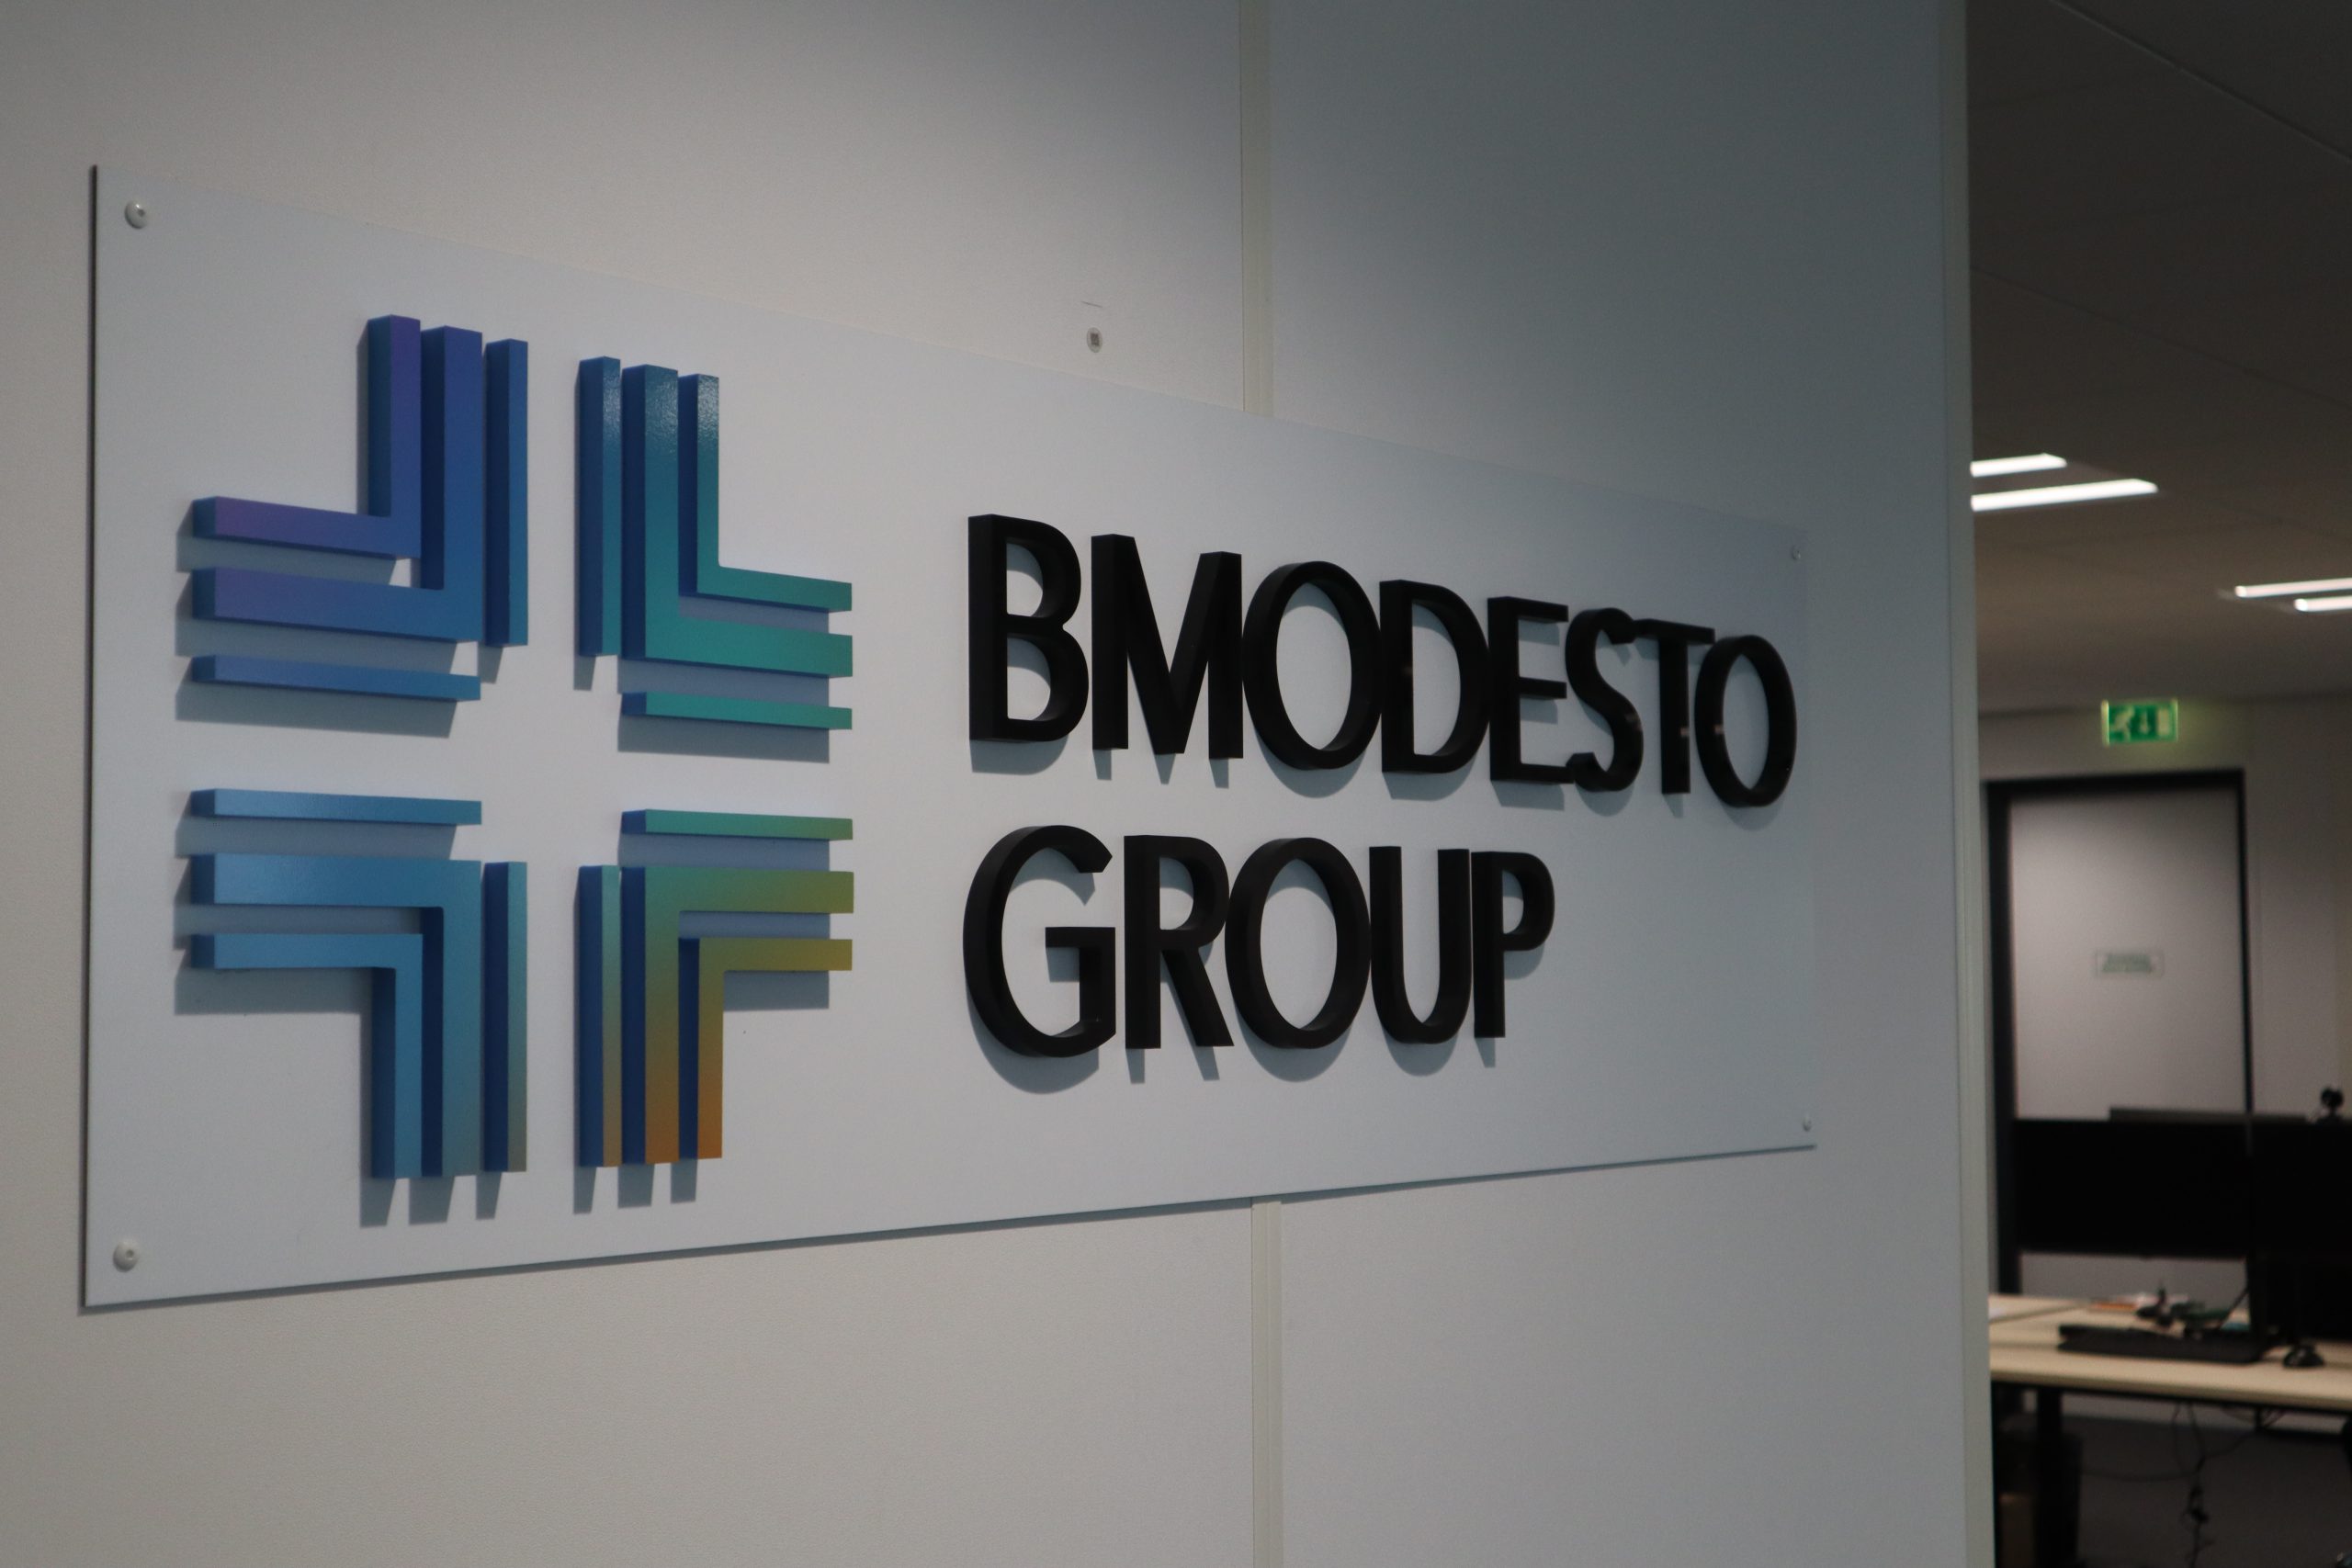 Founding BModesto Group